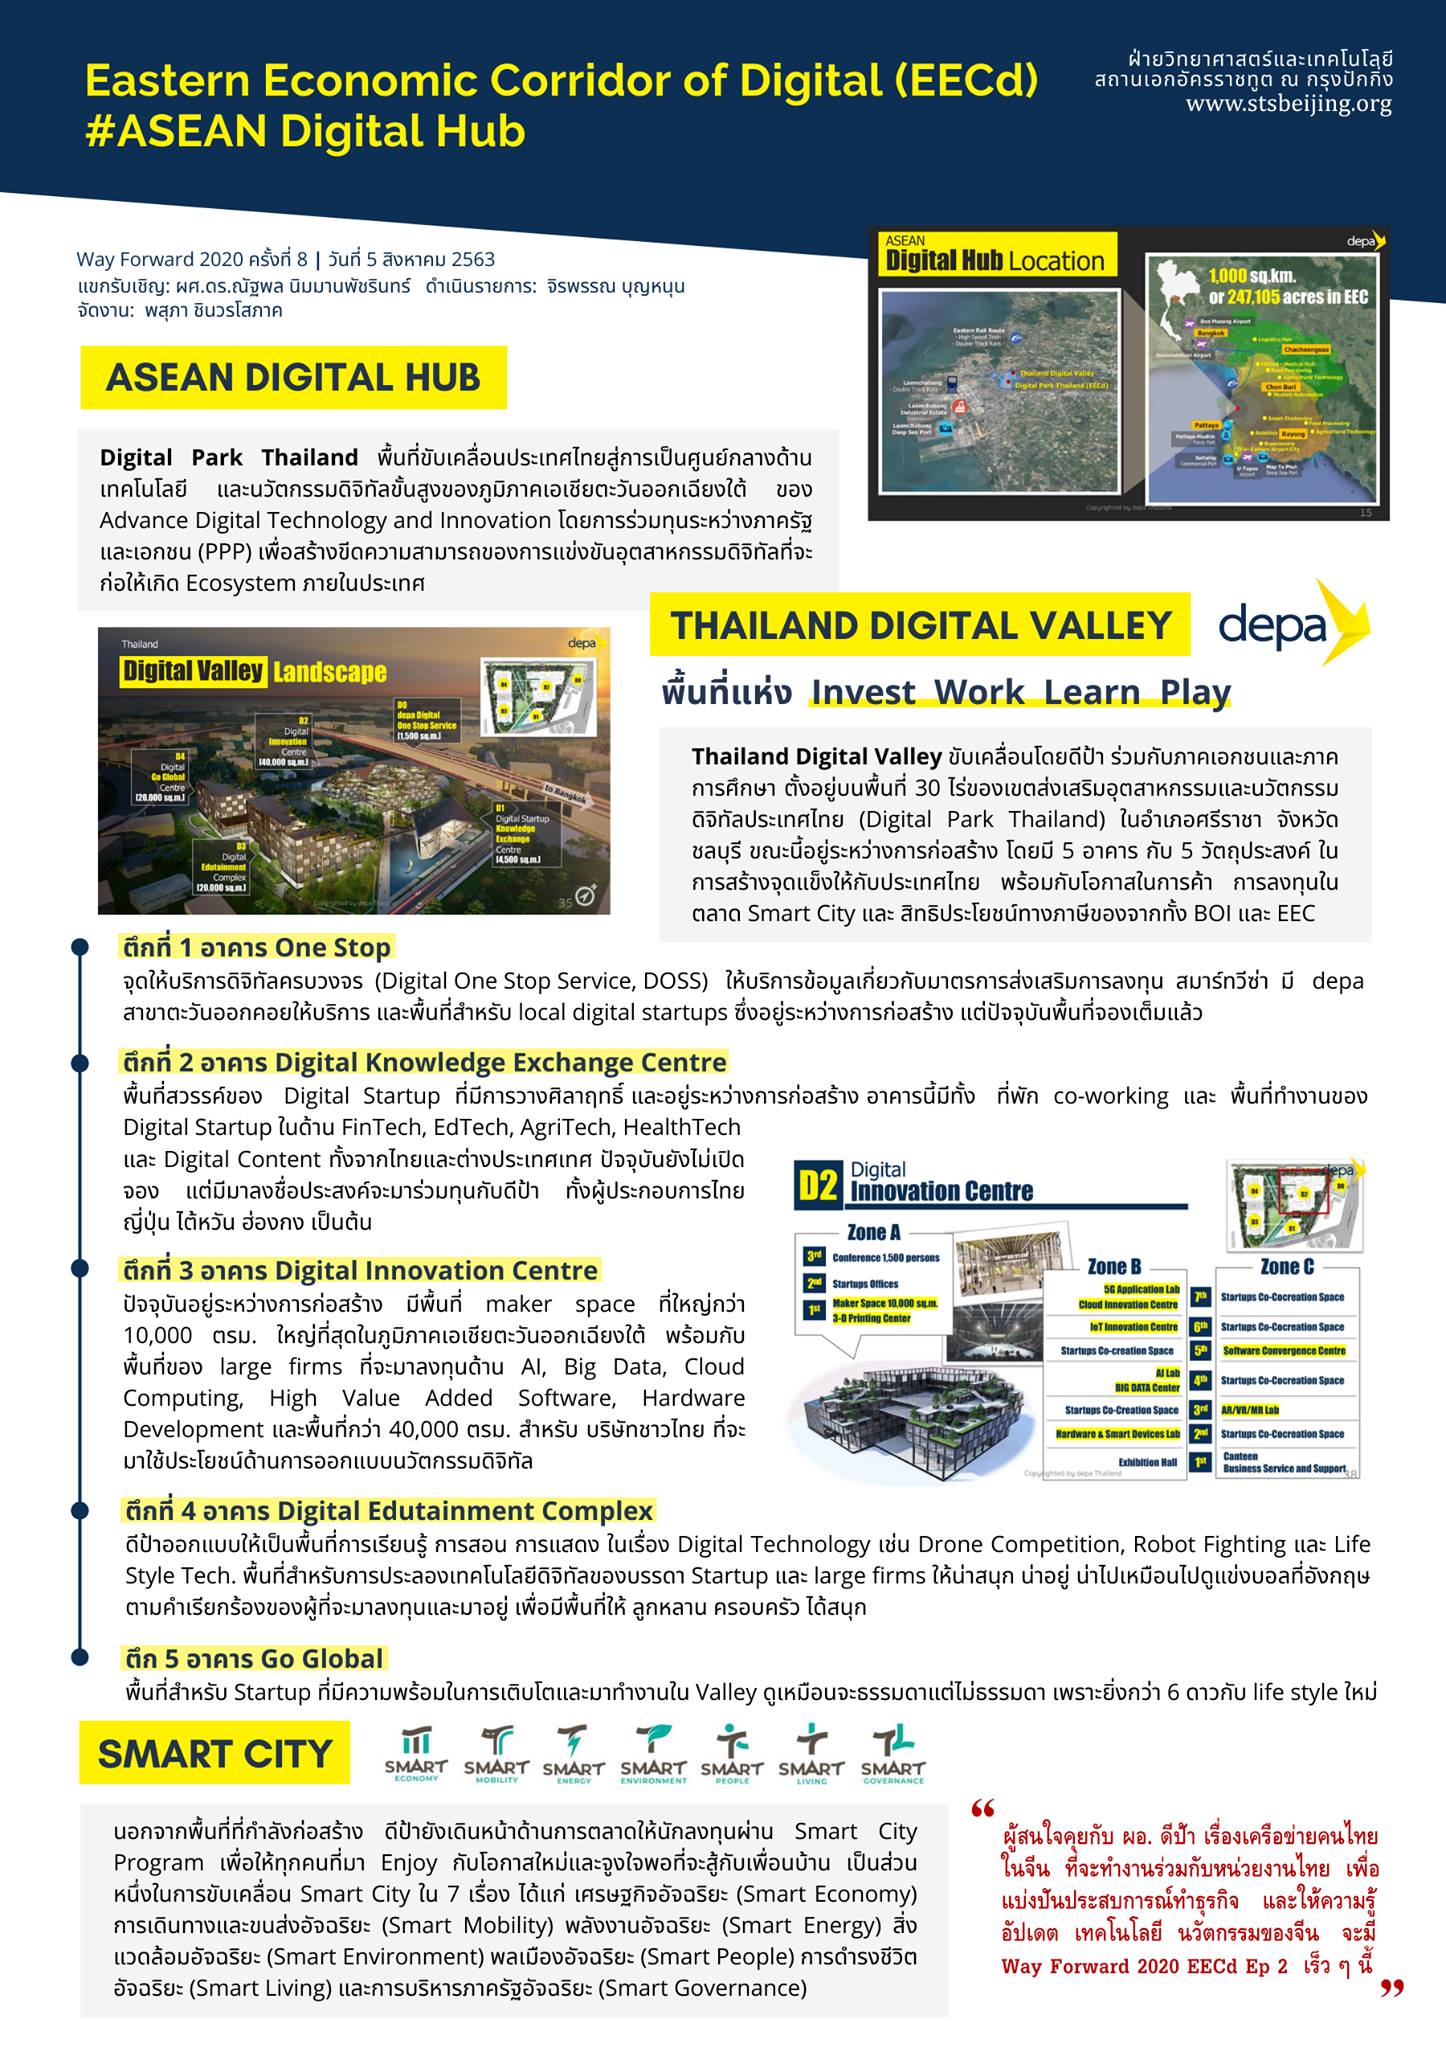 Way Forward 2020 ครั้งที่ 8 “ EECd – ASEAN Digital Hub”